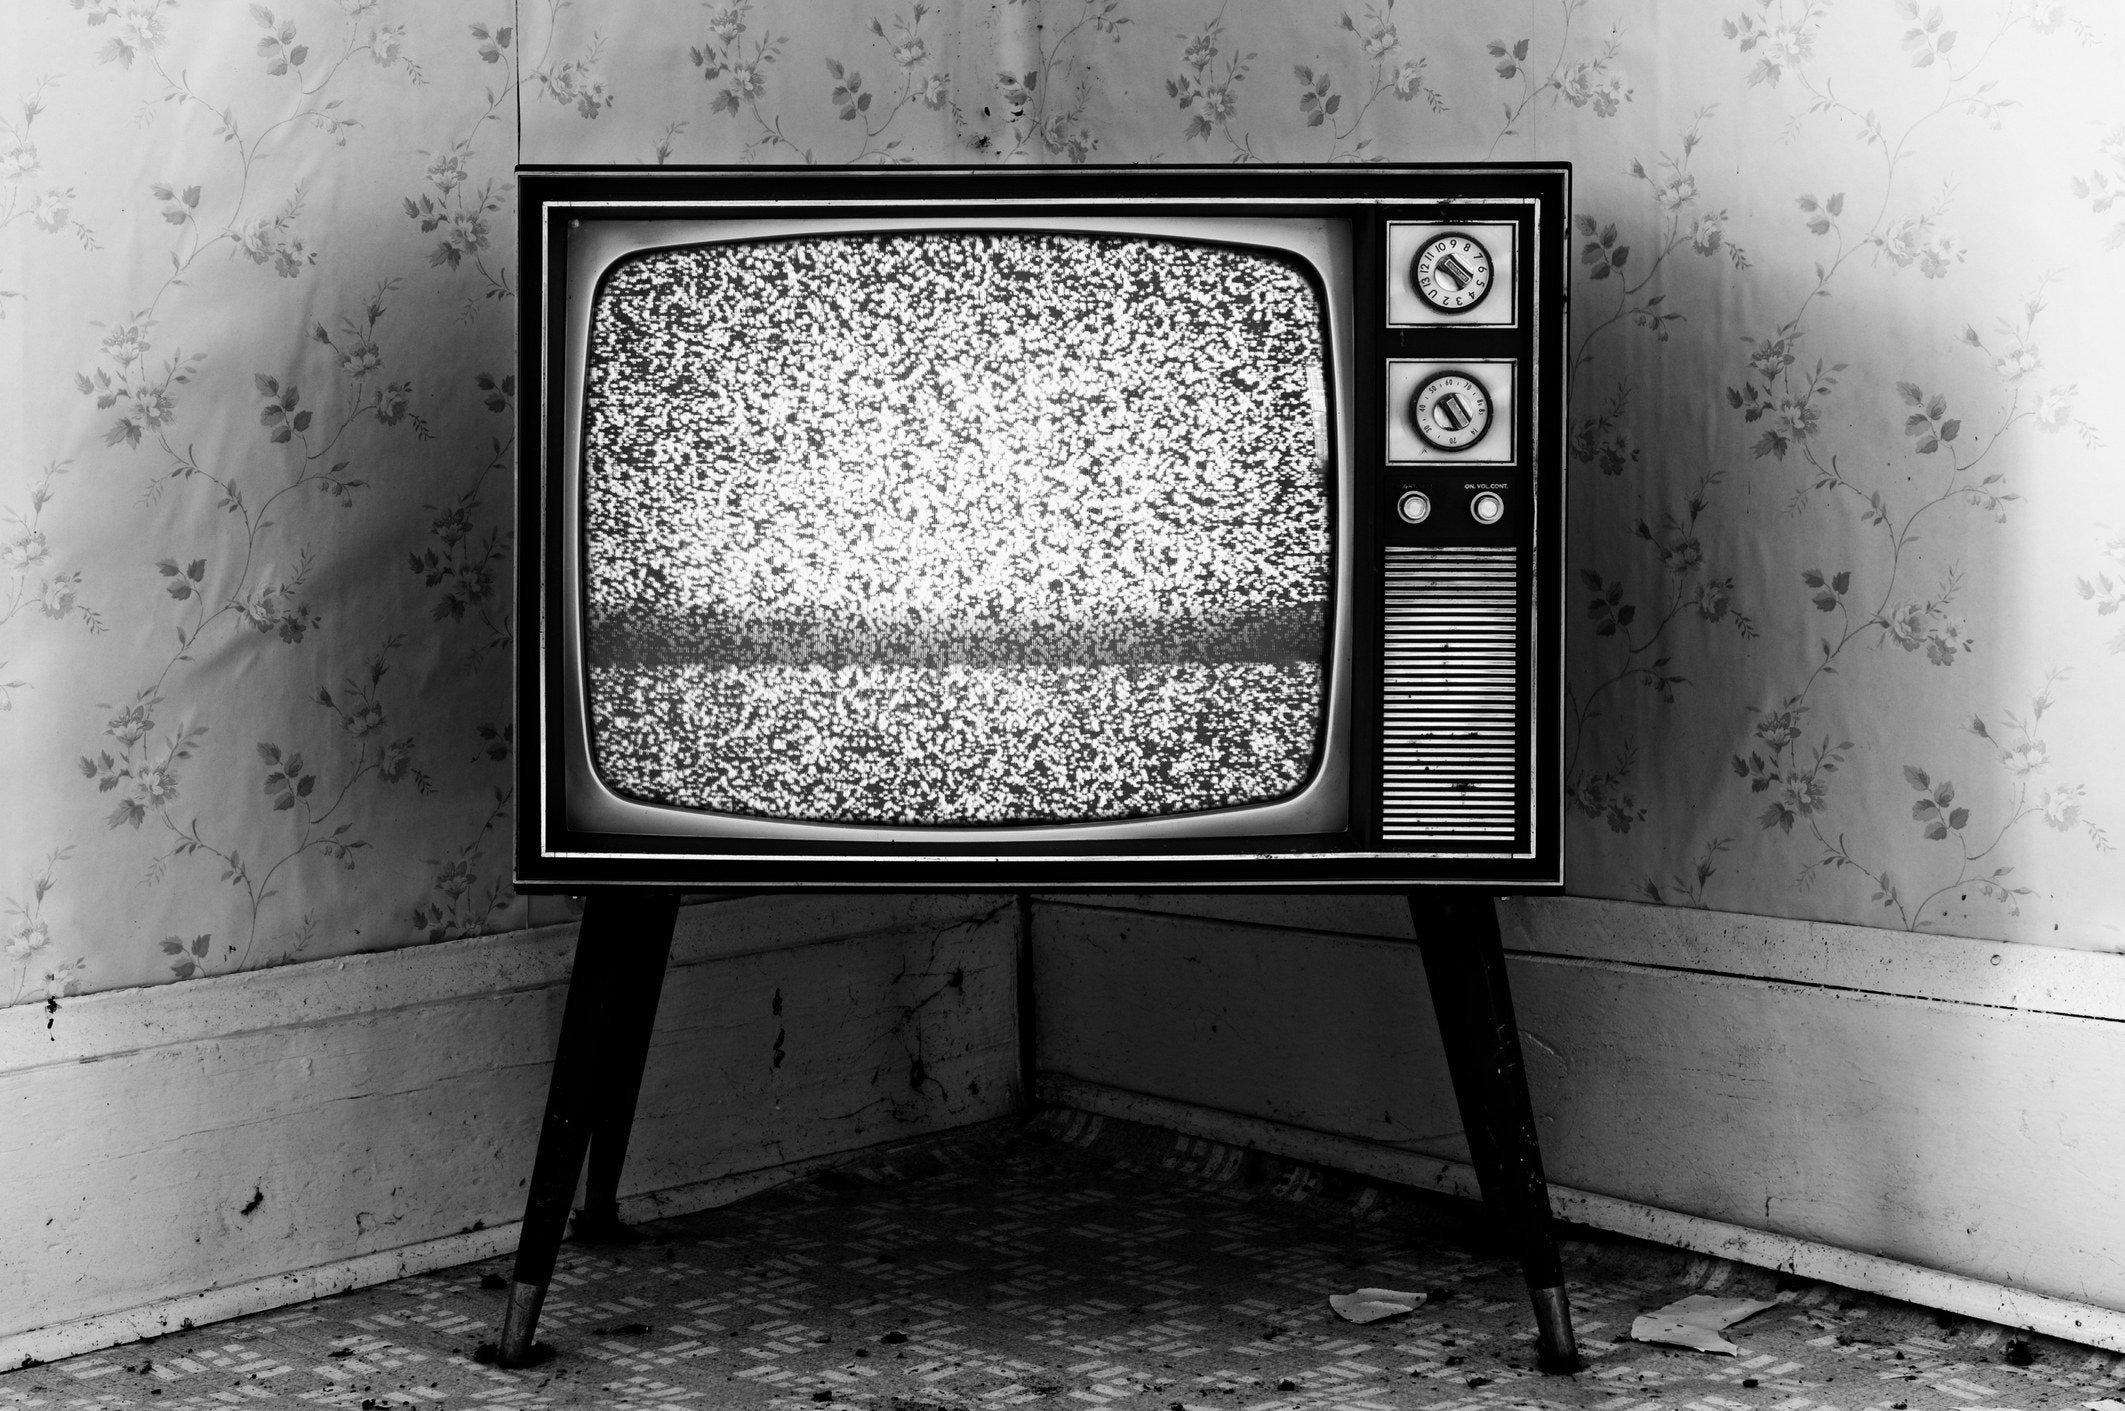 Телевизионный экран. Старый телевизор. Старый телевизор в интерьере. Экран старого телевизора. Старинный телевизор.